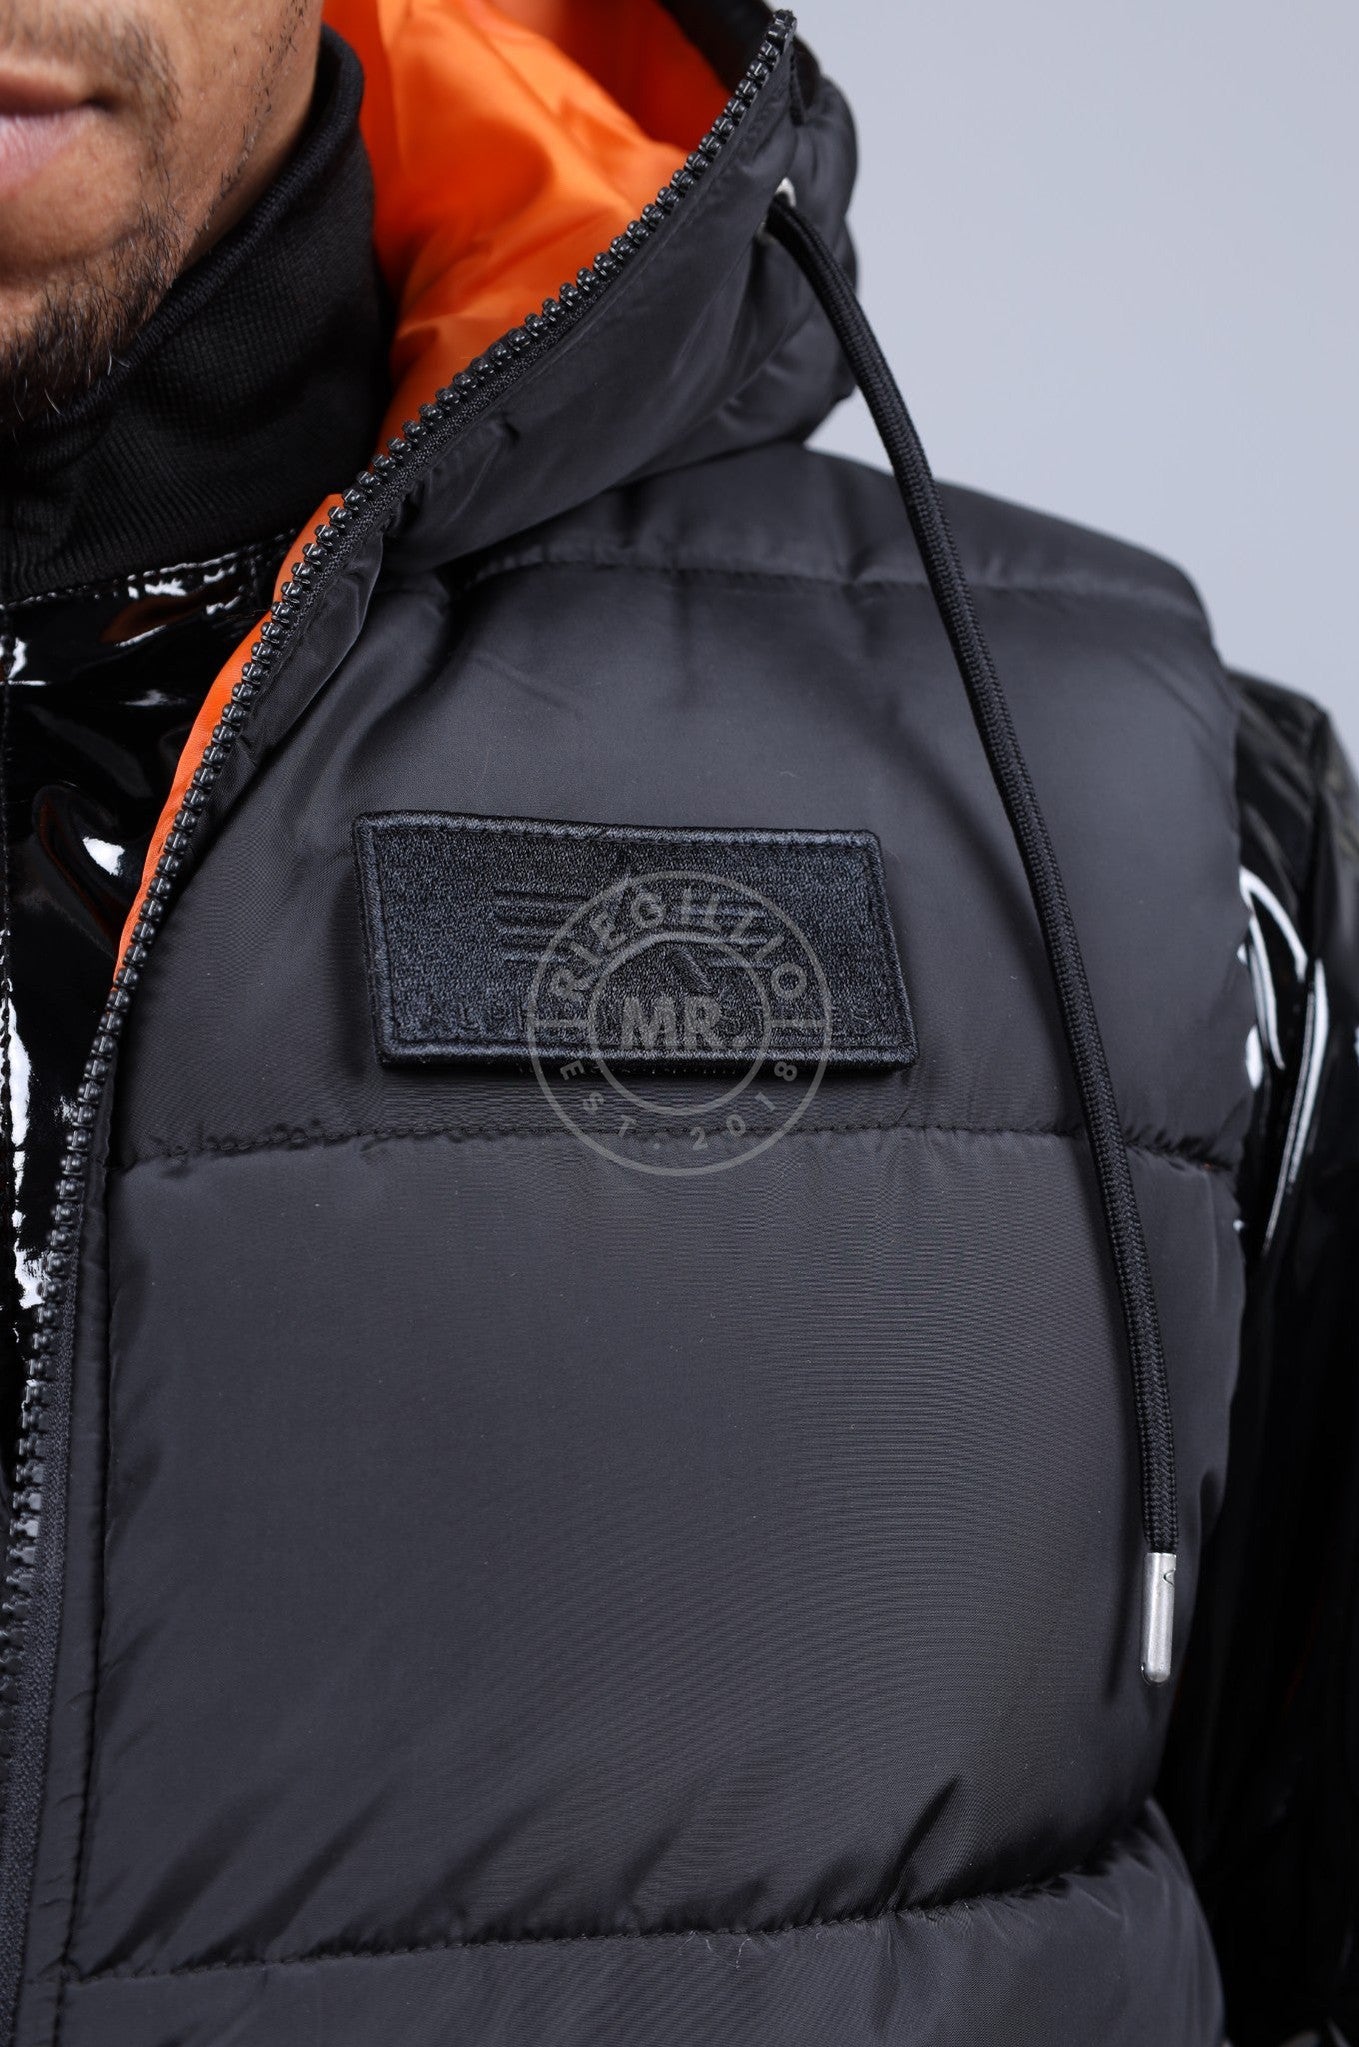 Alpha Industries Hooded Puffer Vest FD - Black-at MR. Riegillio